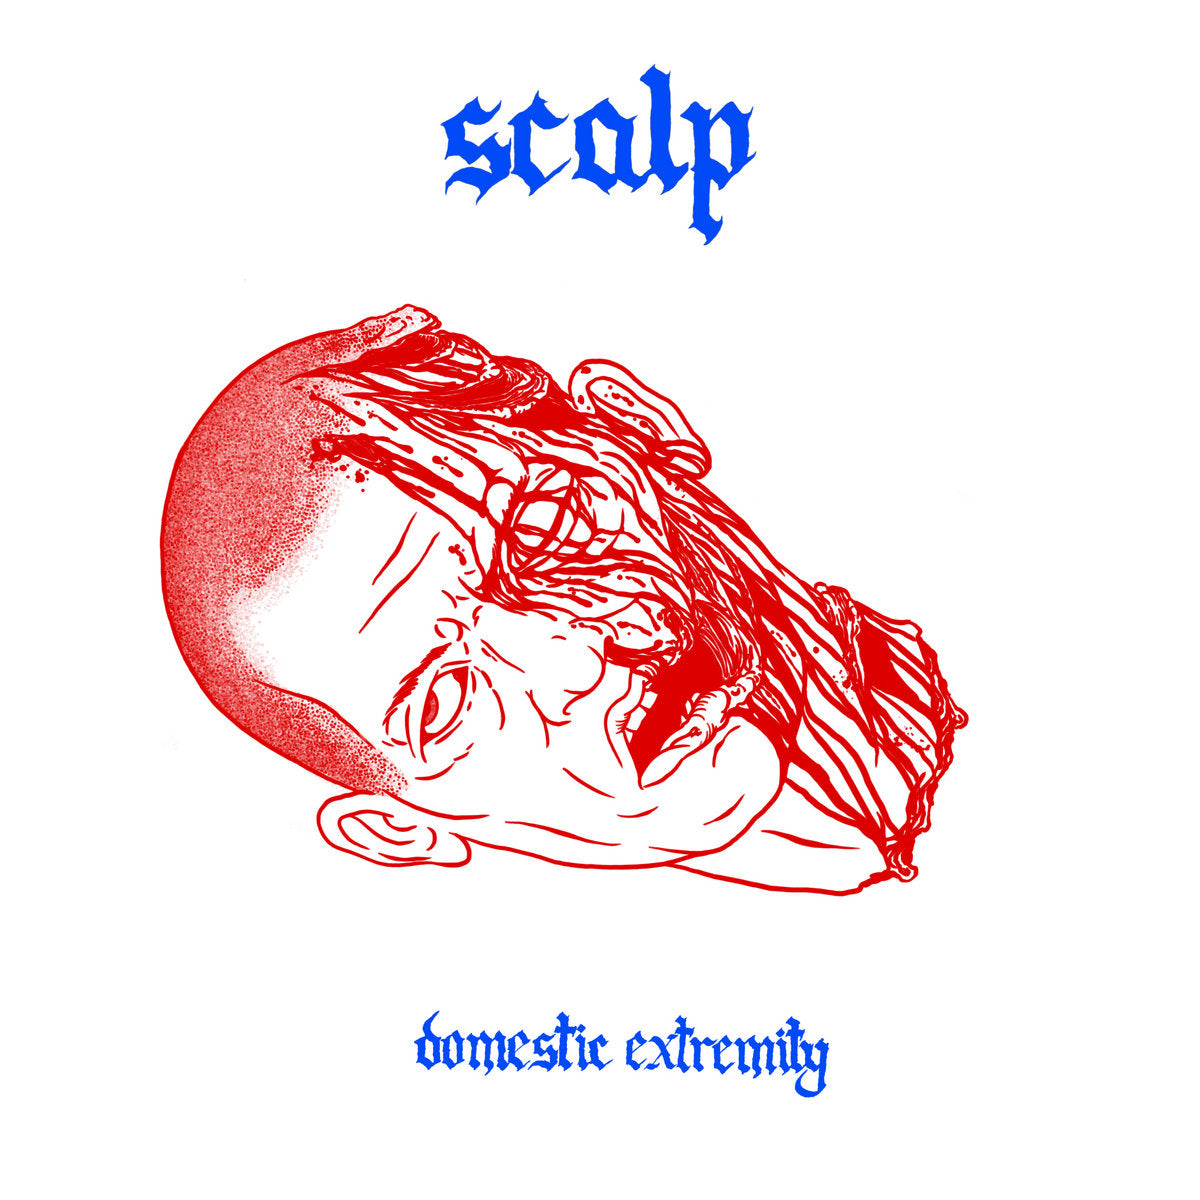 Scalp - Domestic Extremity